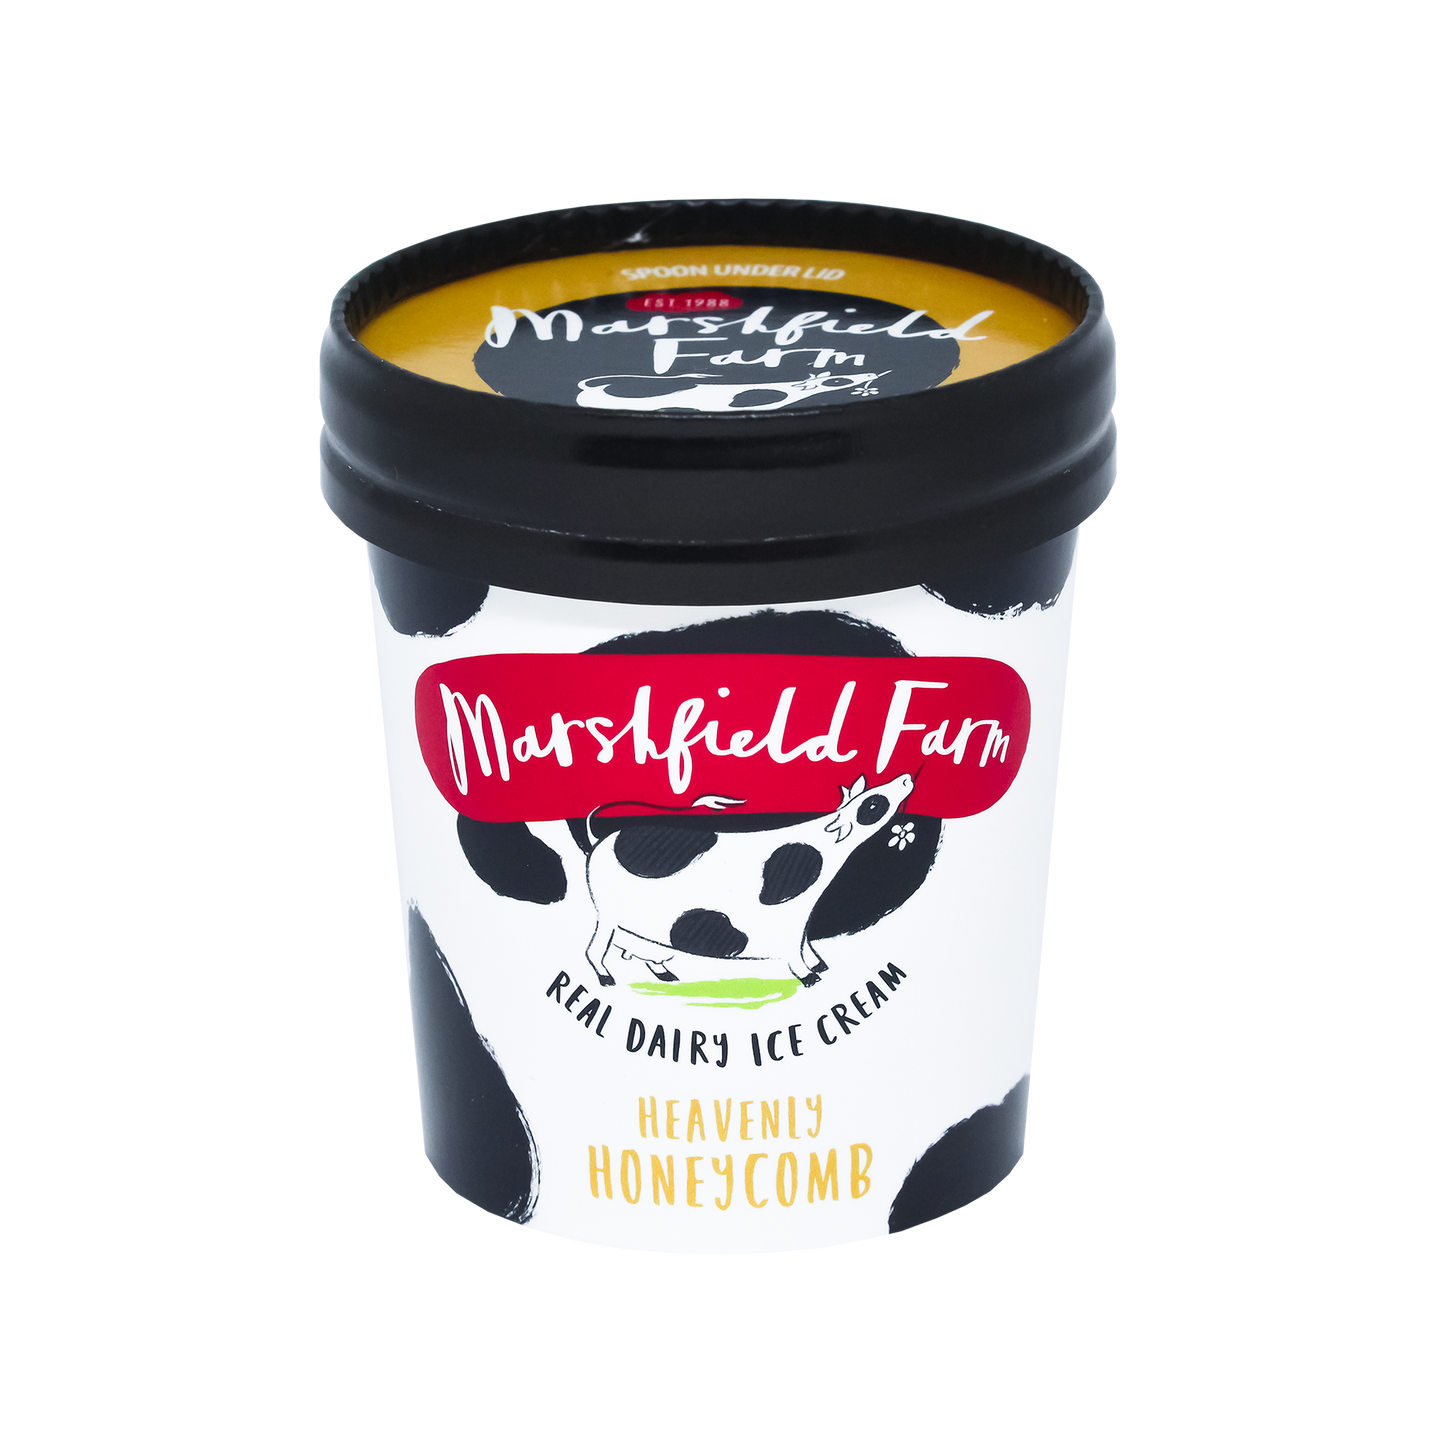 Marshfield Farm Heavenly Honeycomb Ice Cream 125ml Tub